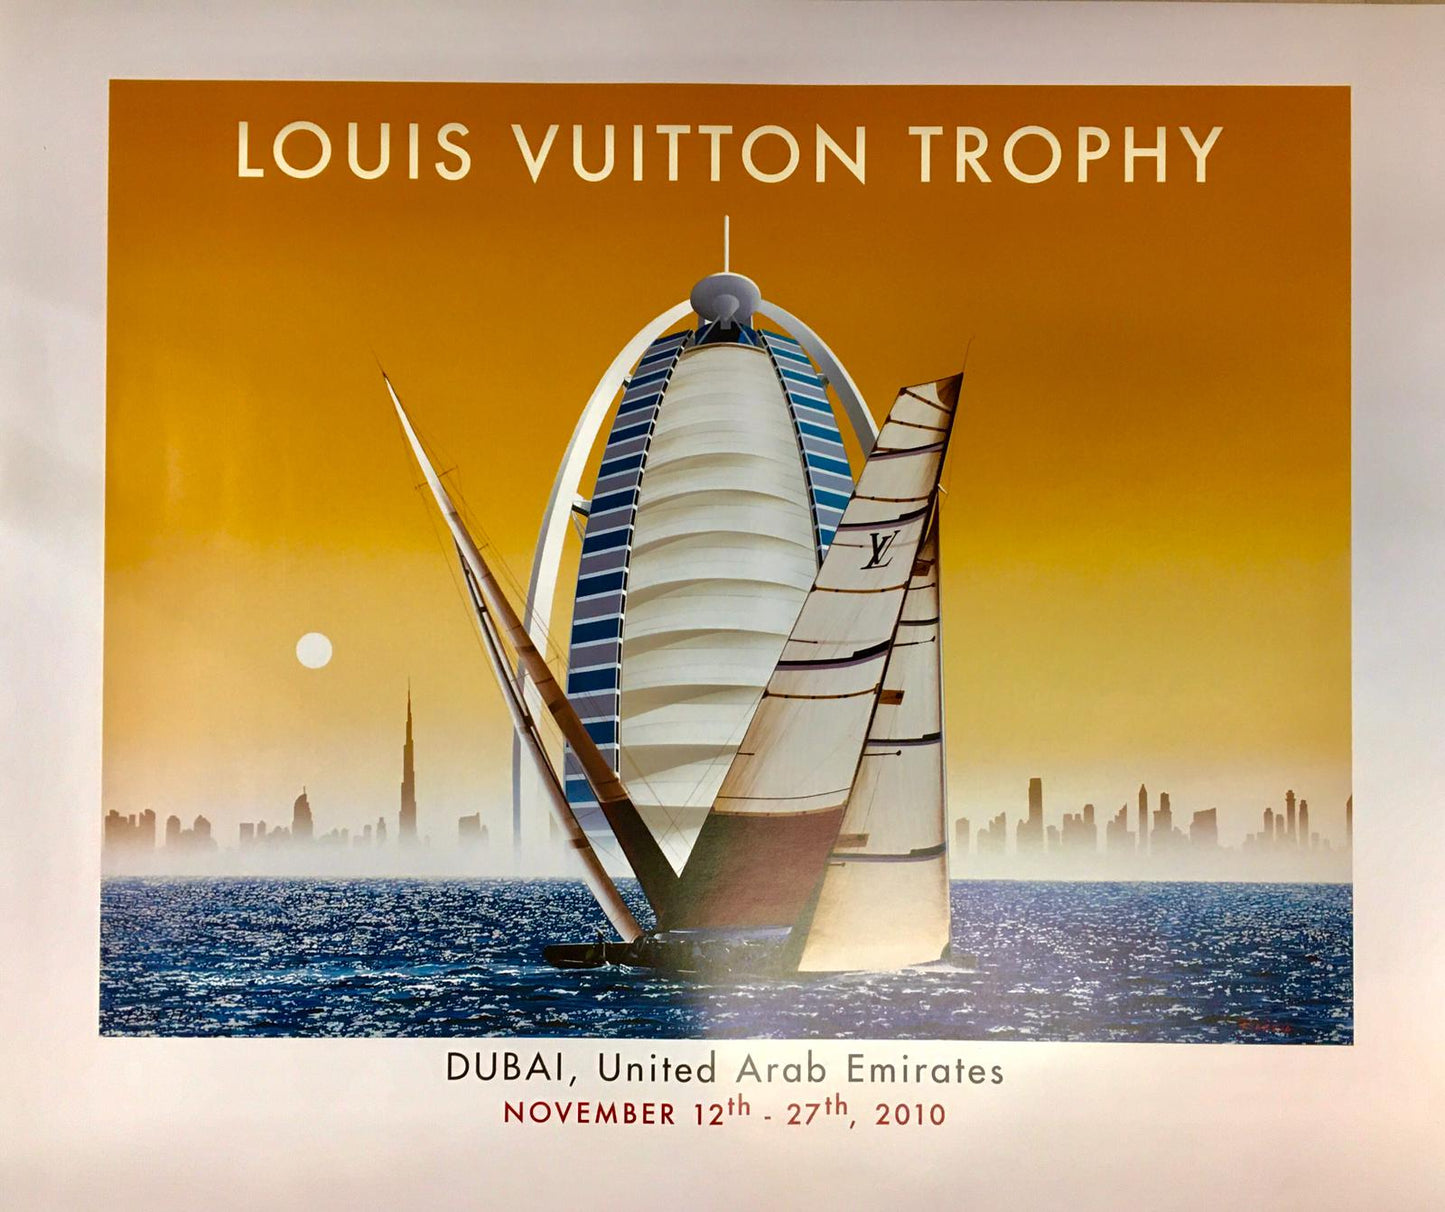 Manifesto Pubblicitario Louis Vuitton Dubai 2010 (Razzia) Tortona4Arte